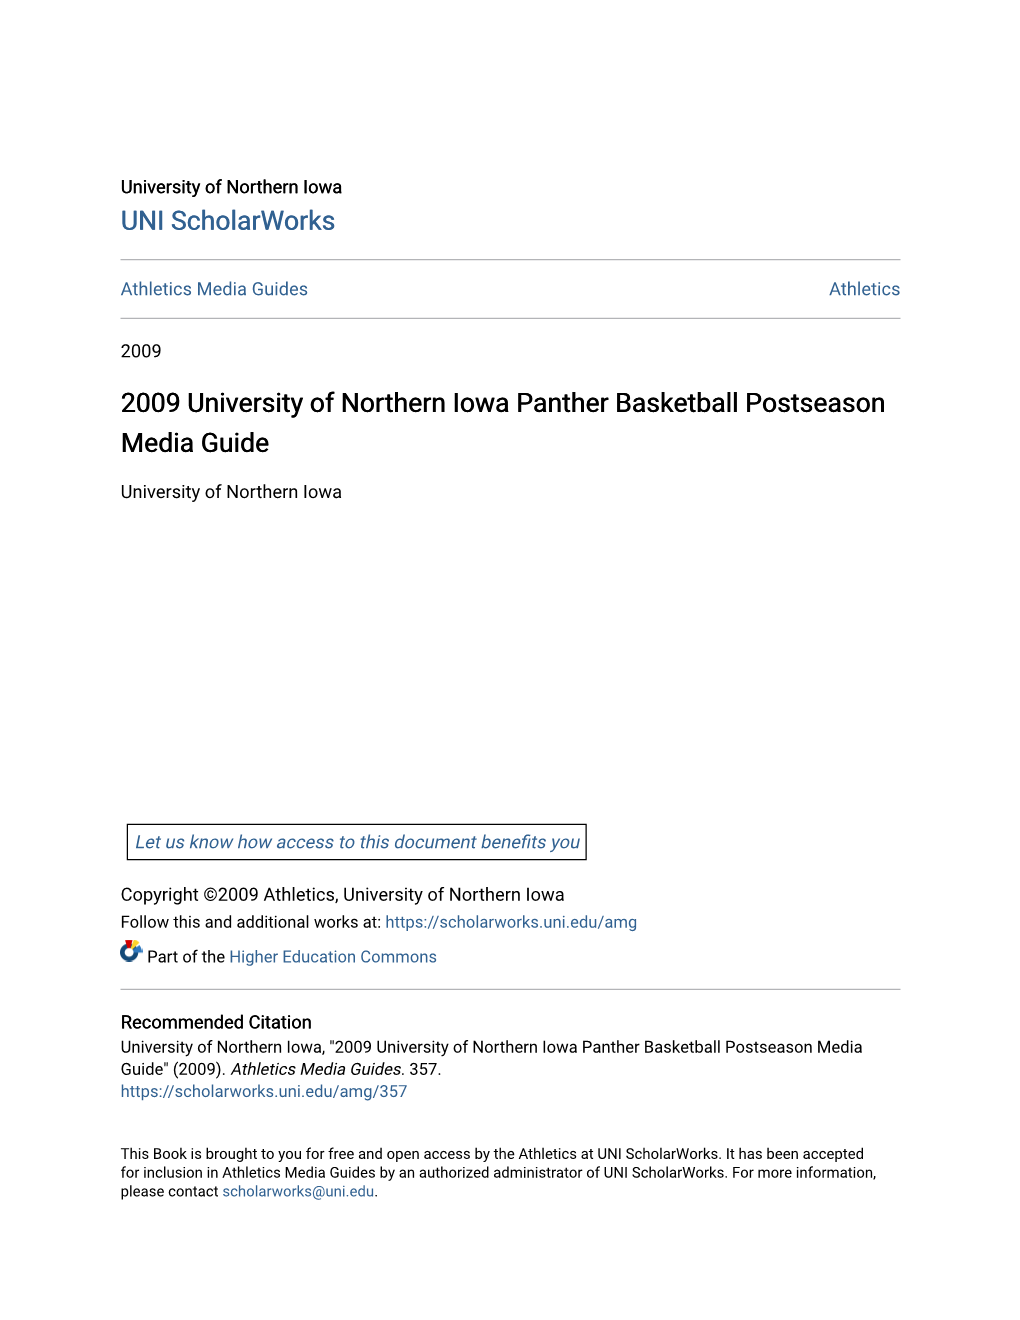 2009 University of Northern Iowa Panther Basketball Postseason Media Guide